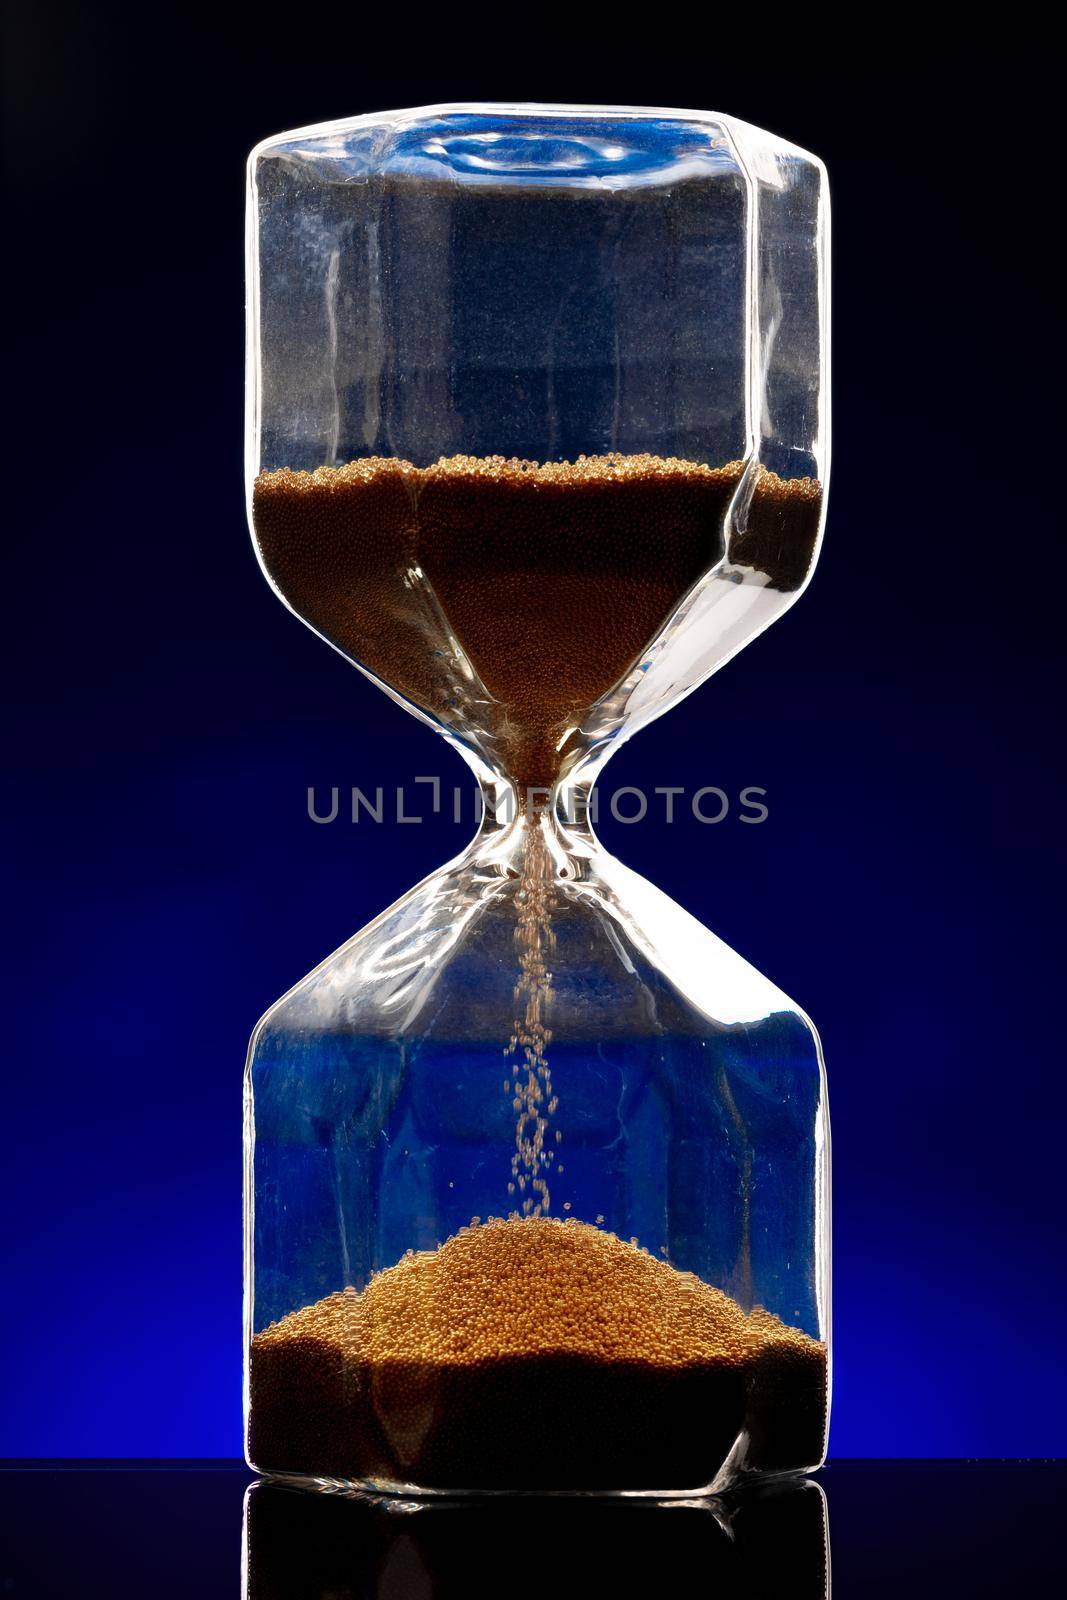 Hourglass illuminated on dark blue background close up by Fabrikasimf